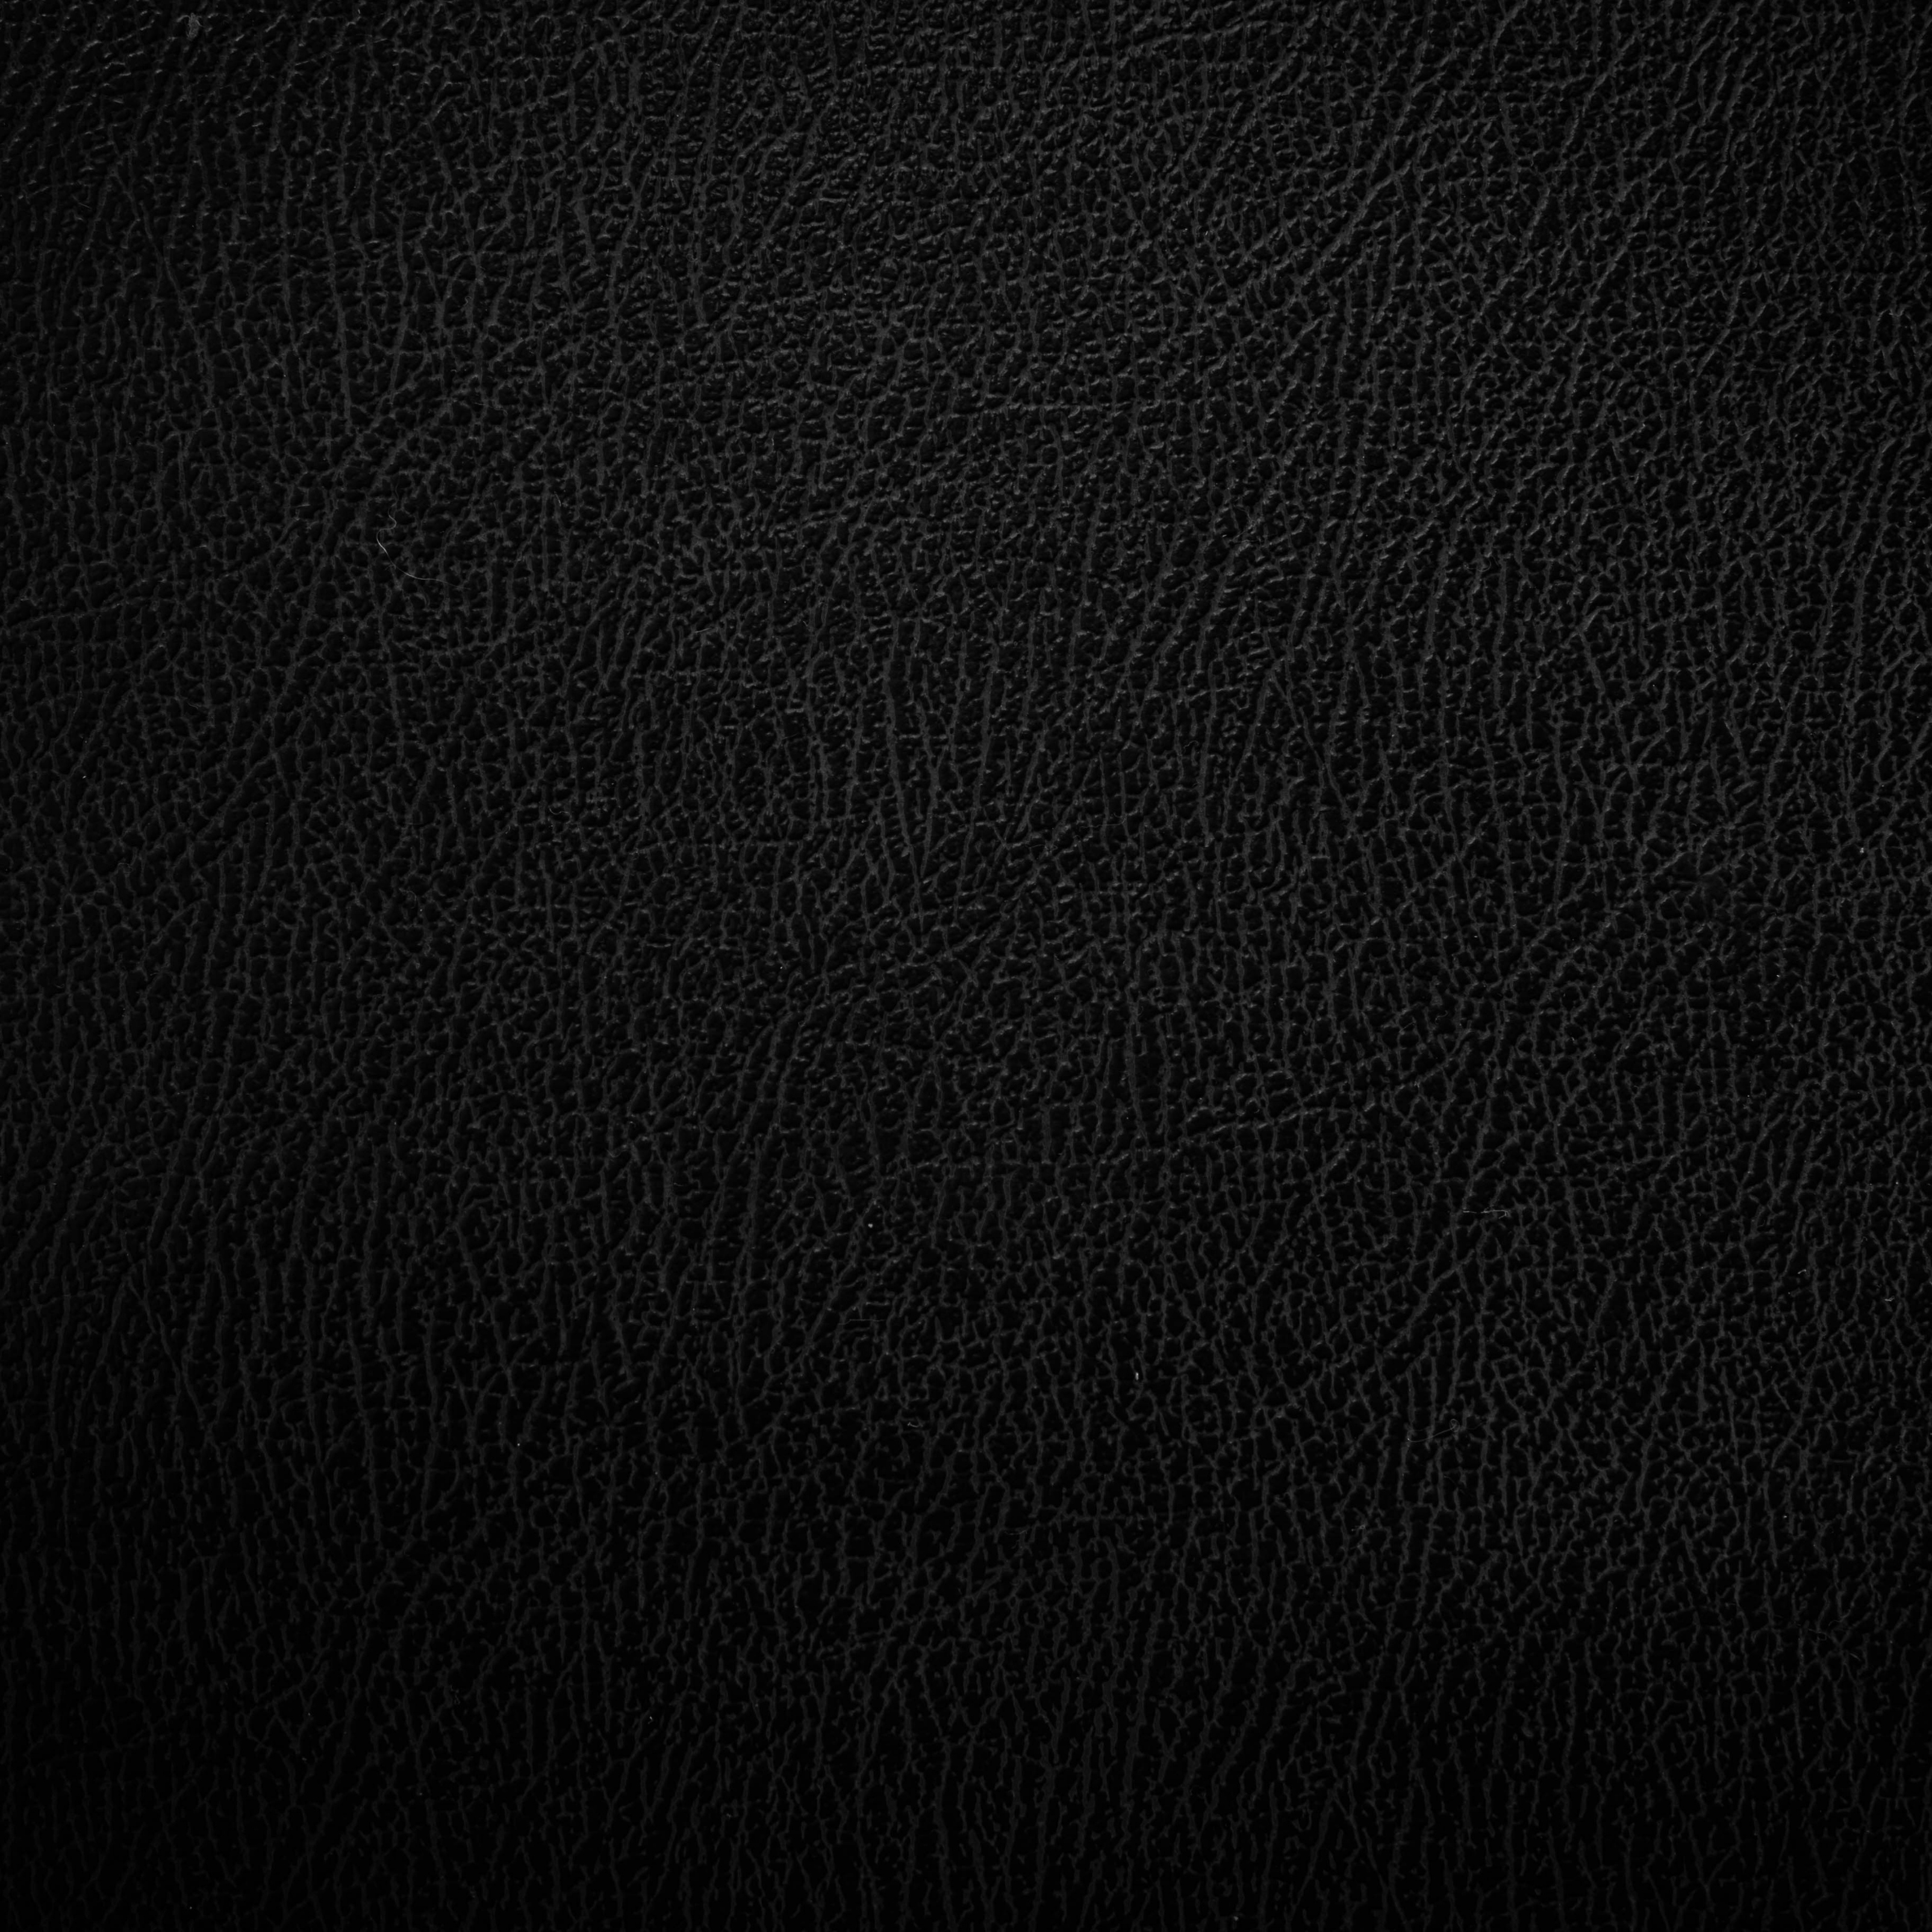 Black Leather Texture iPad Wallpaper